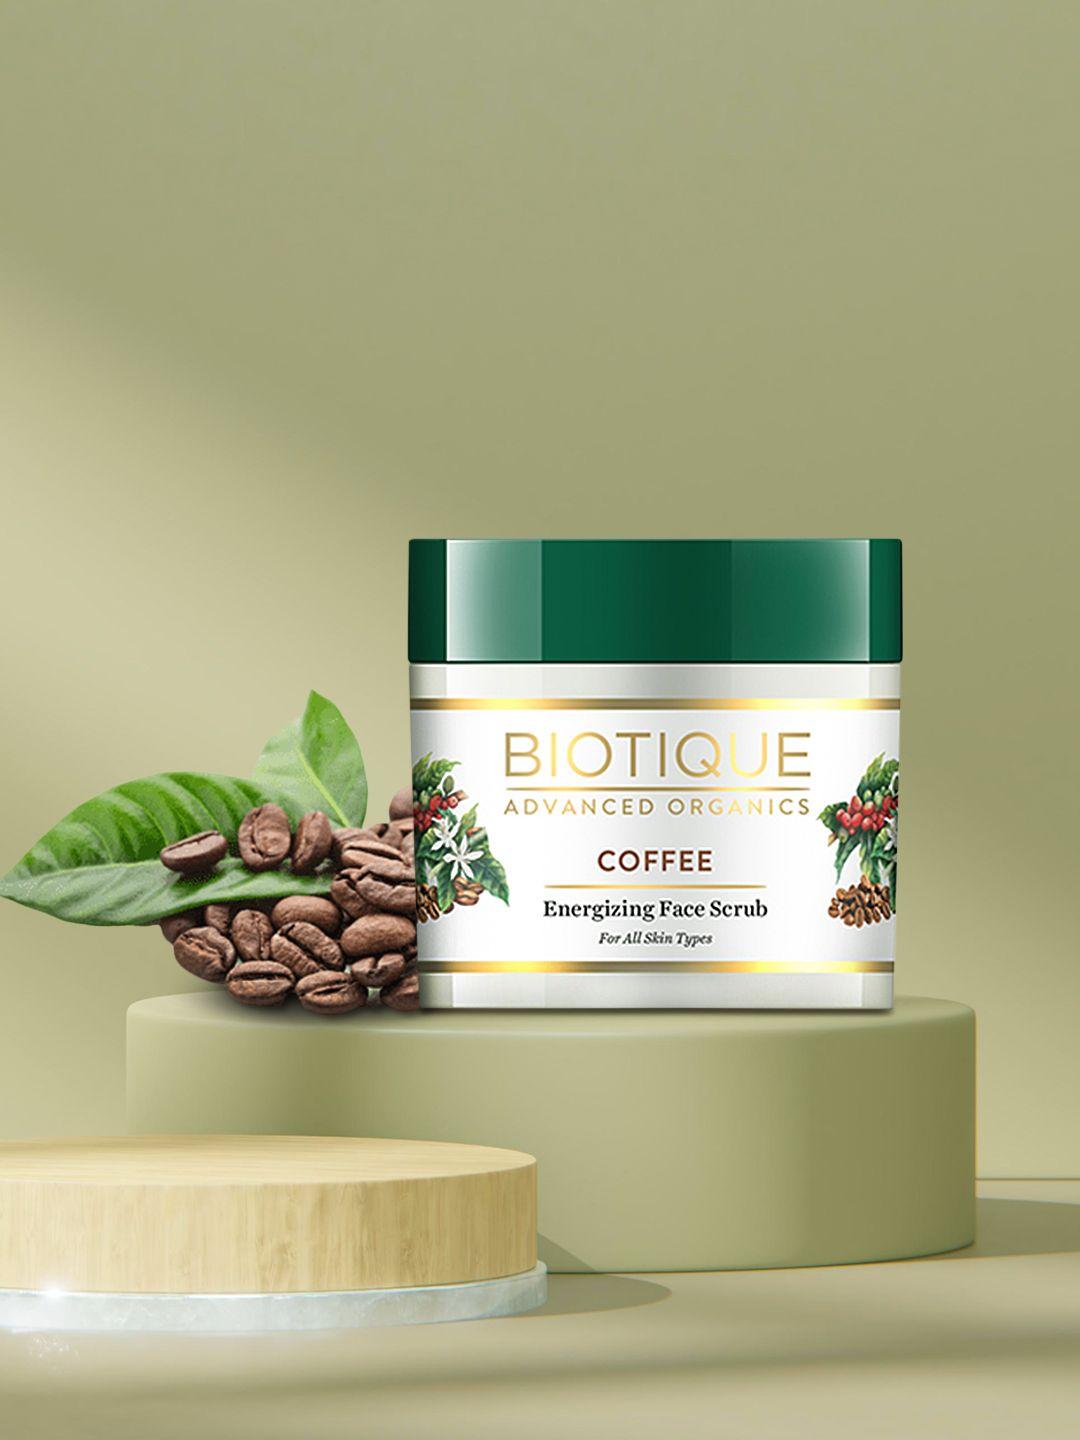 Biotique Advanced Organics Coffee Energizing Face Scrub for All Skin Types 50 g